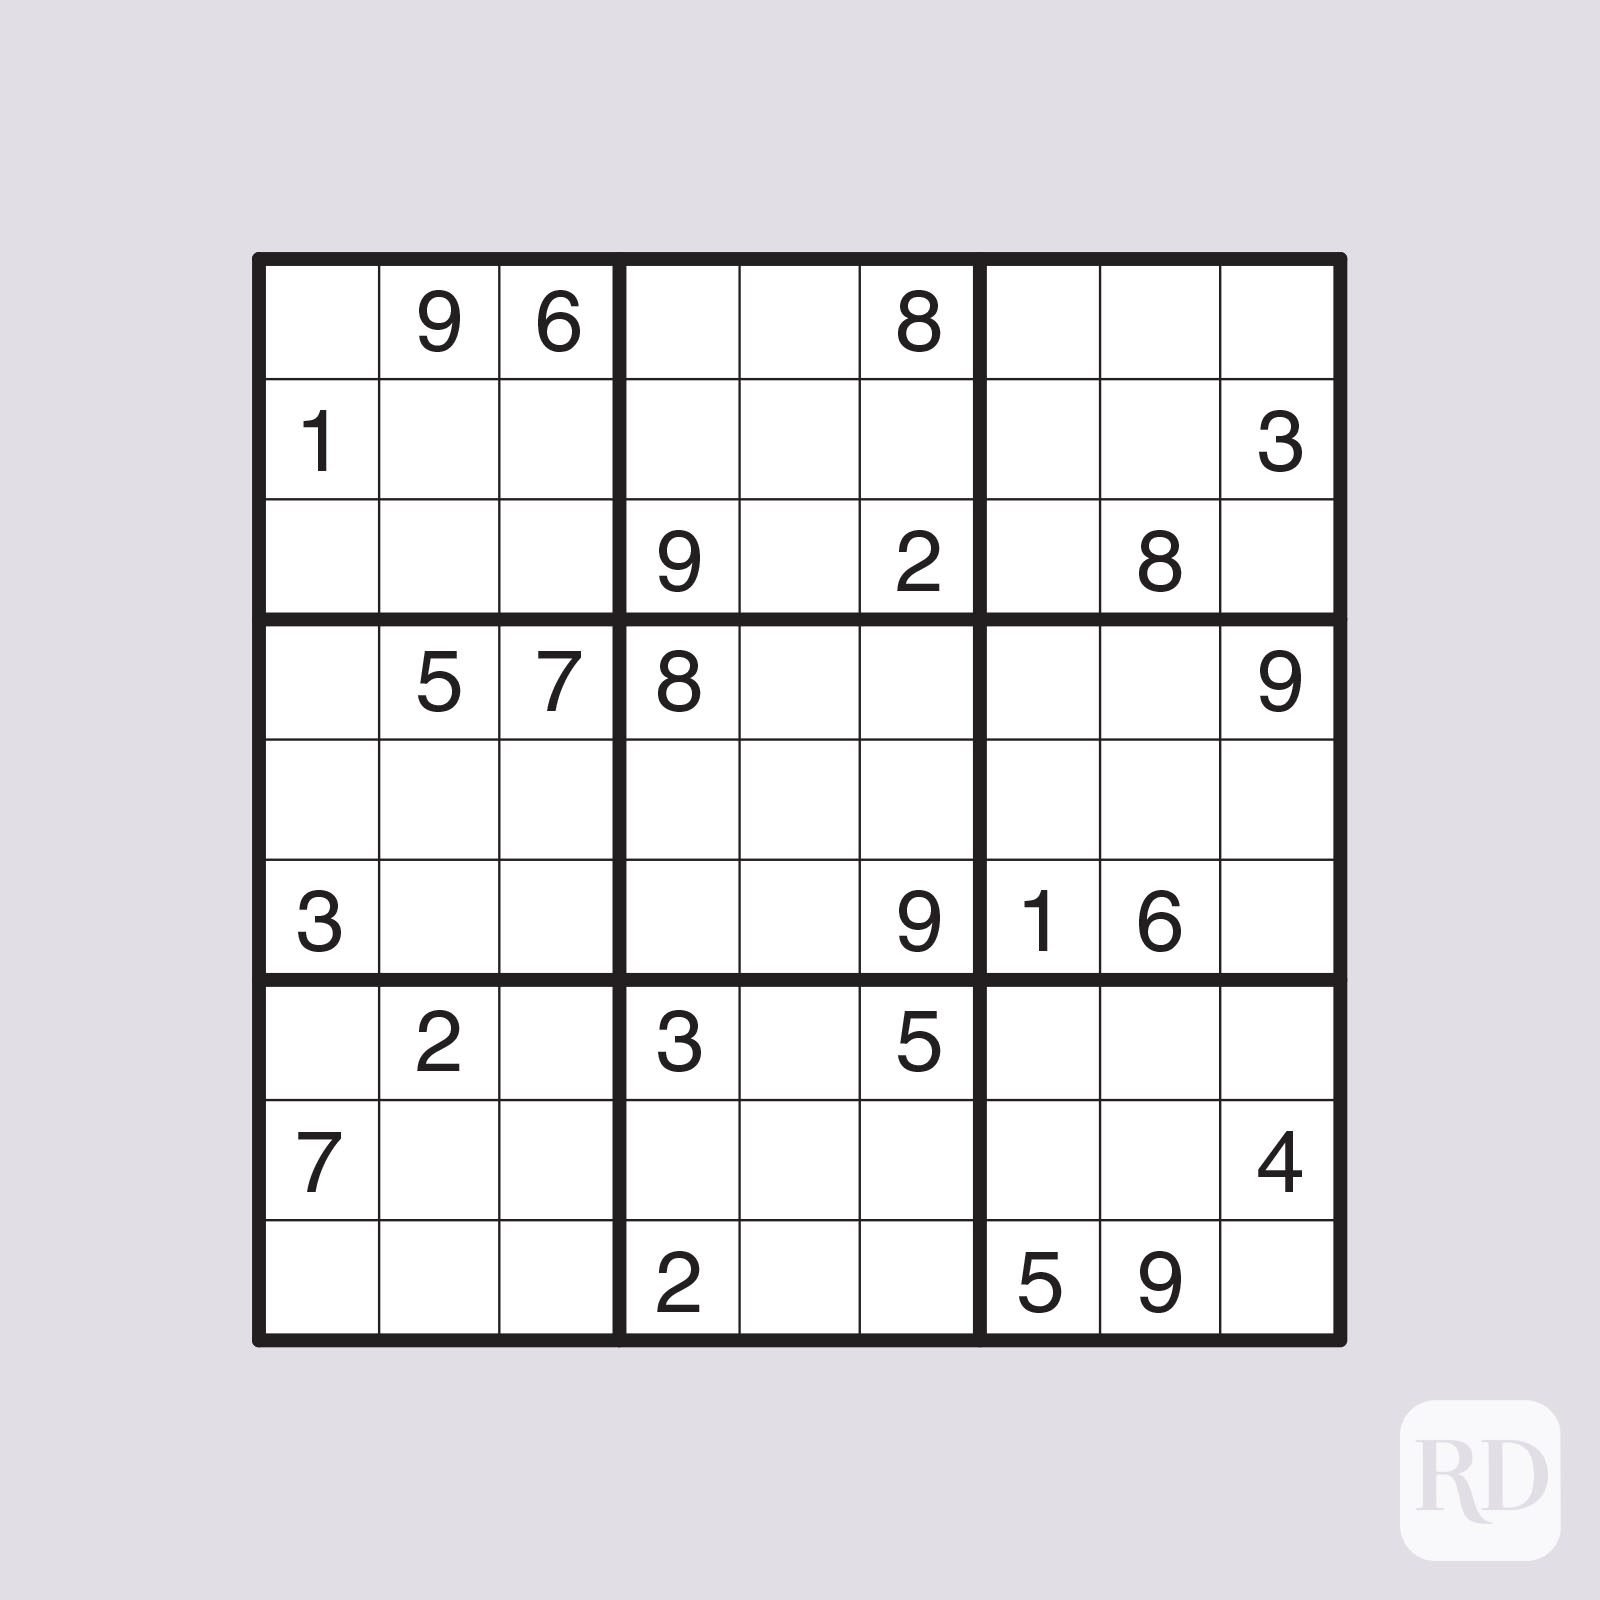 Very hard Sudoku puzzle